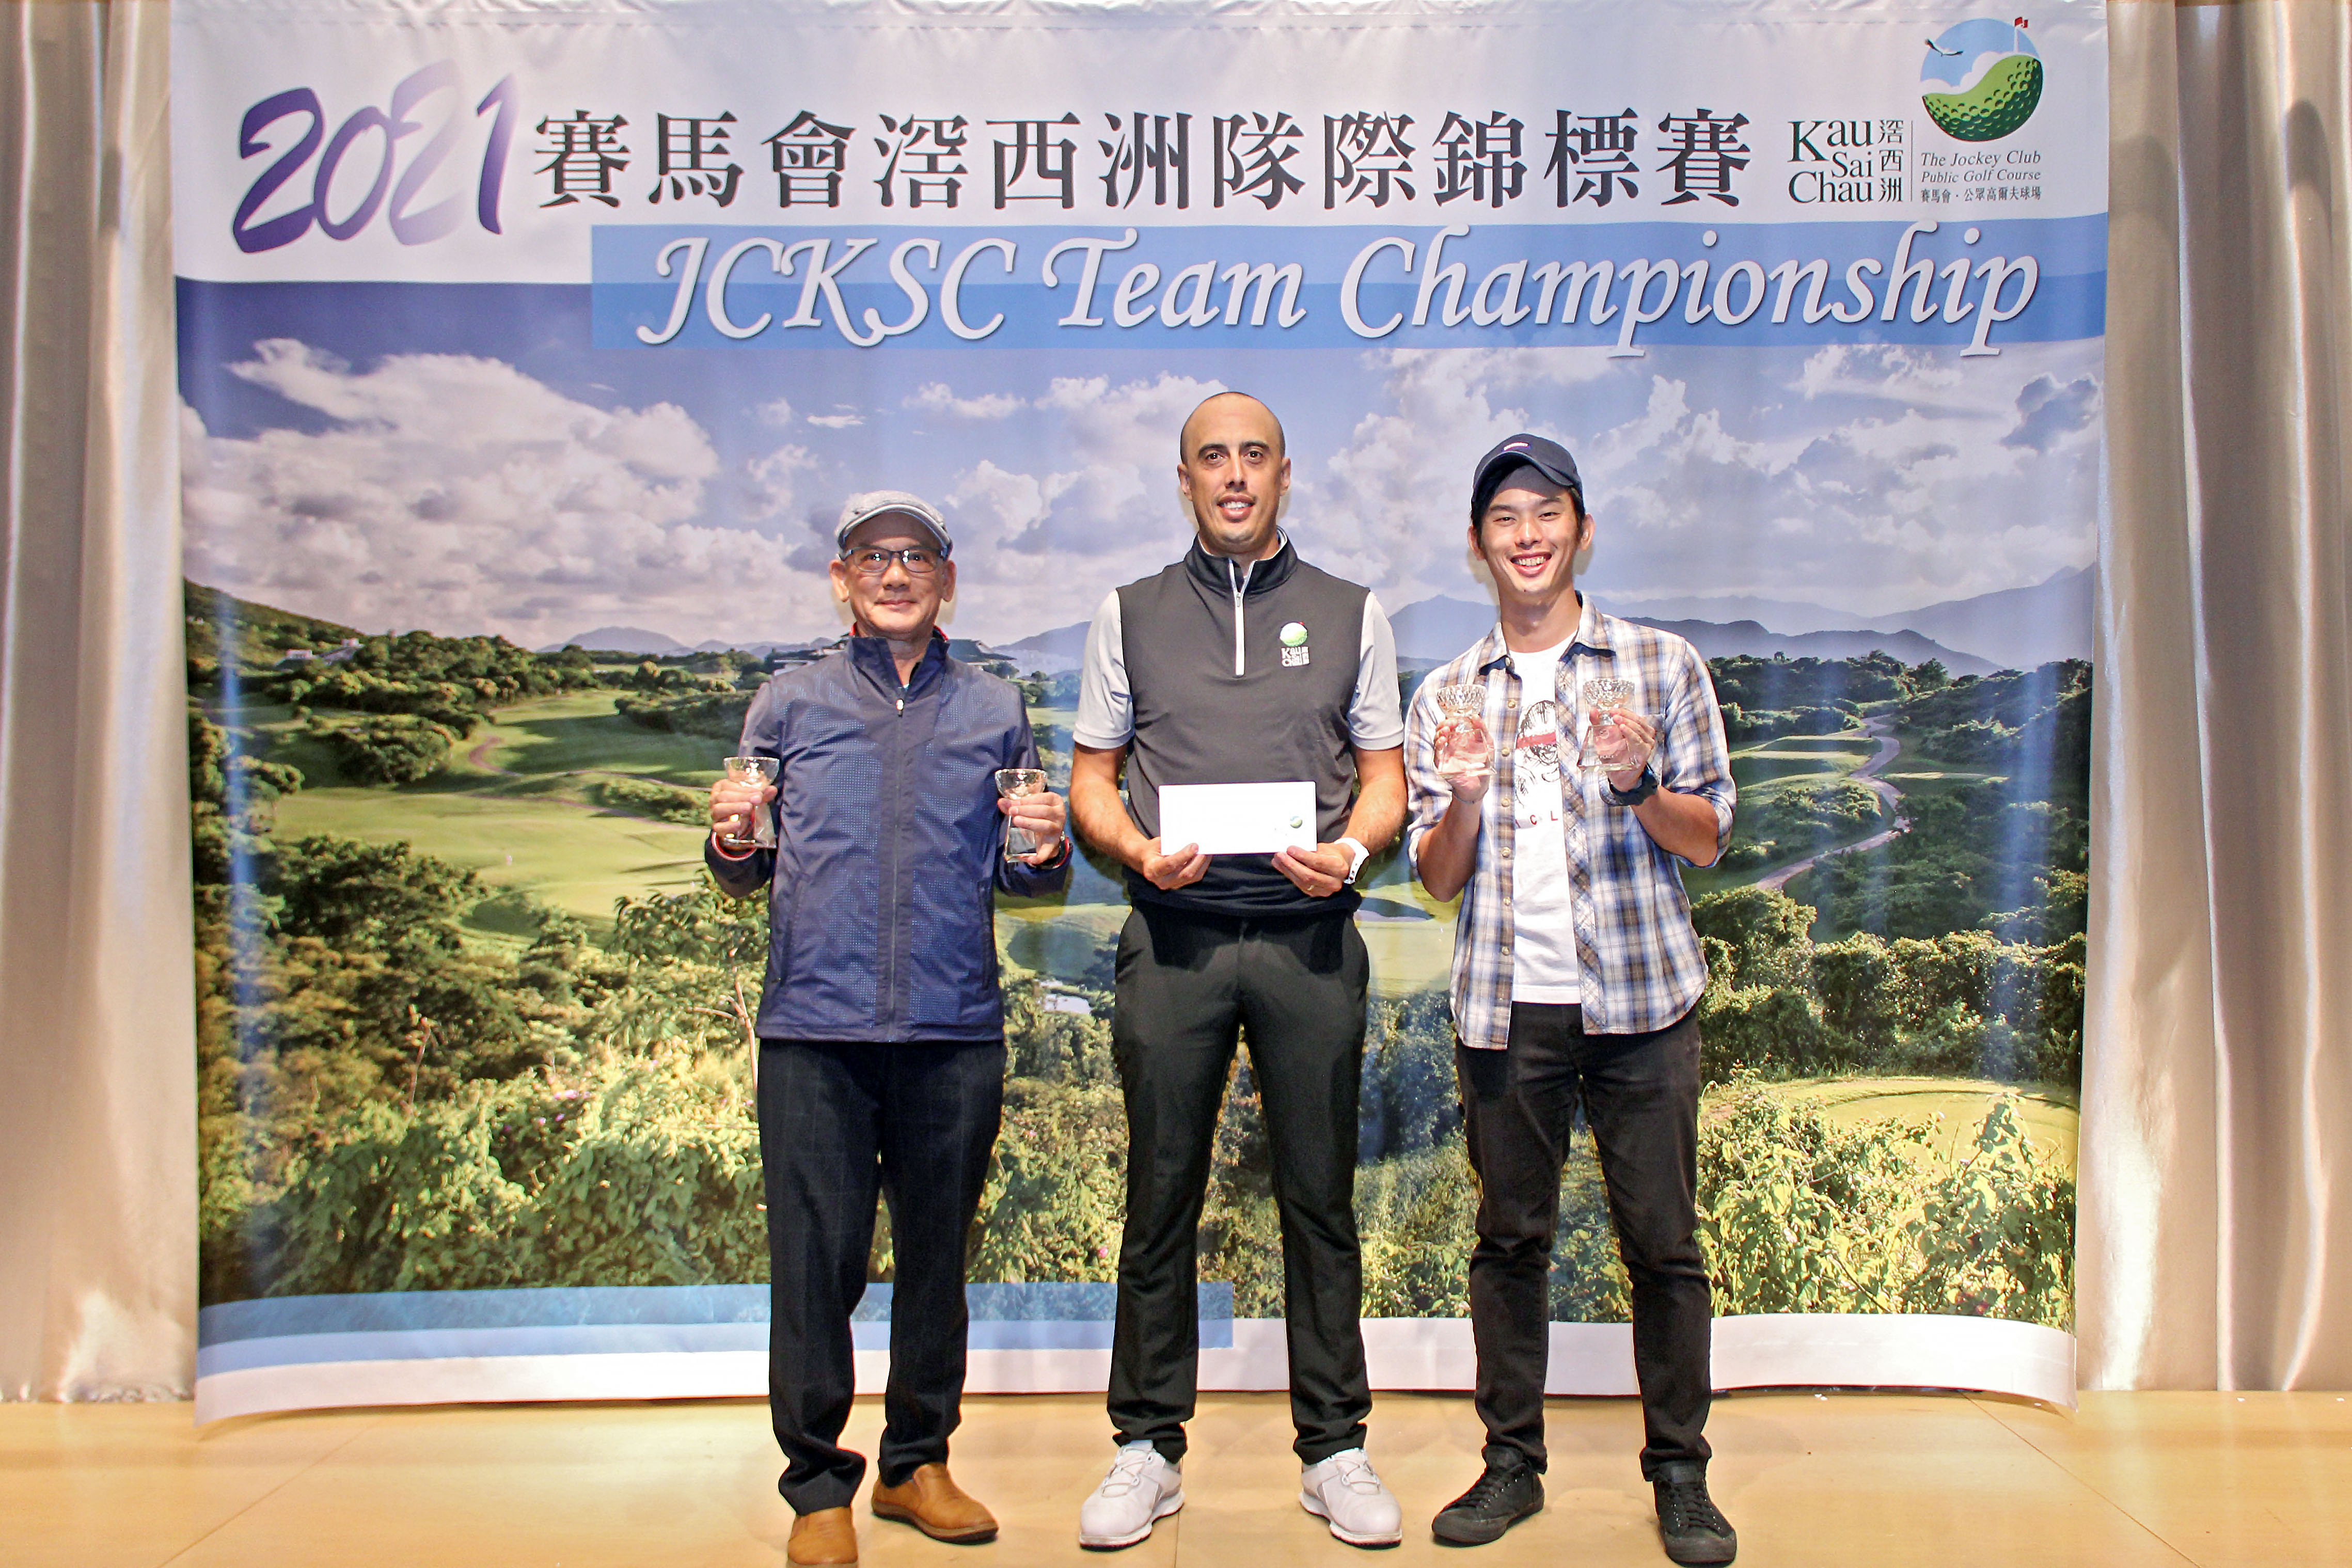 3rd Place: Healthy 2021 Nigel Fu, Bernard Yuen, Frank Leung, Ng Kwok Kuen